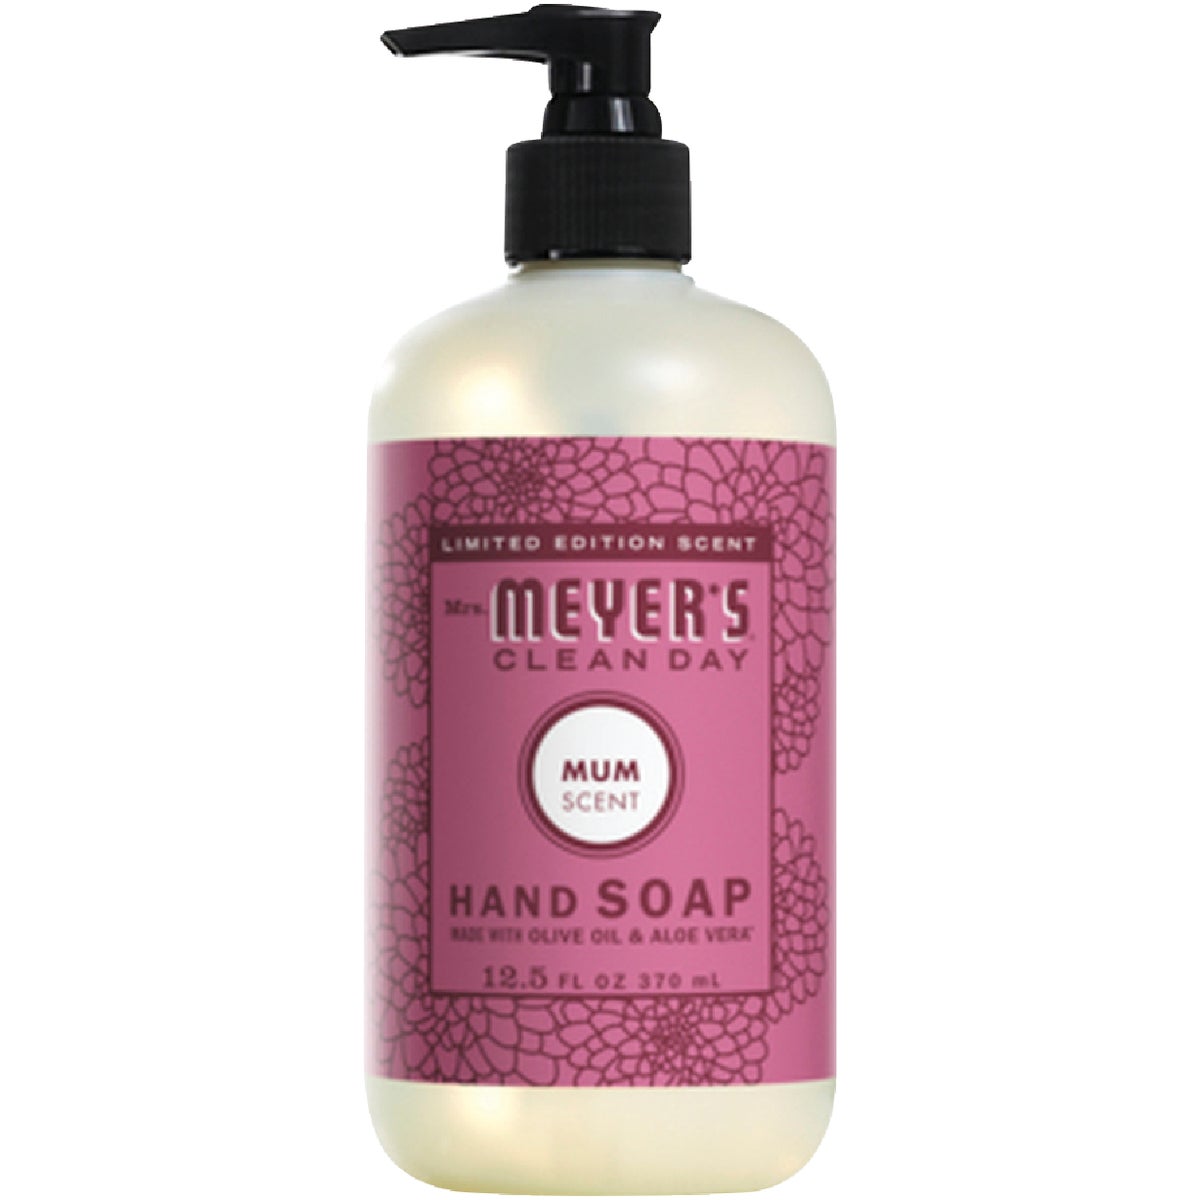 Mrs. Meyer's Clean Day 12.5 Oz. Mum Liquid Hand Soap